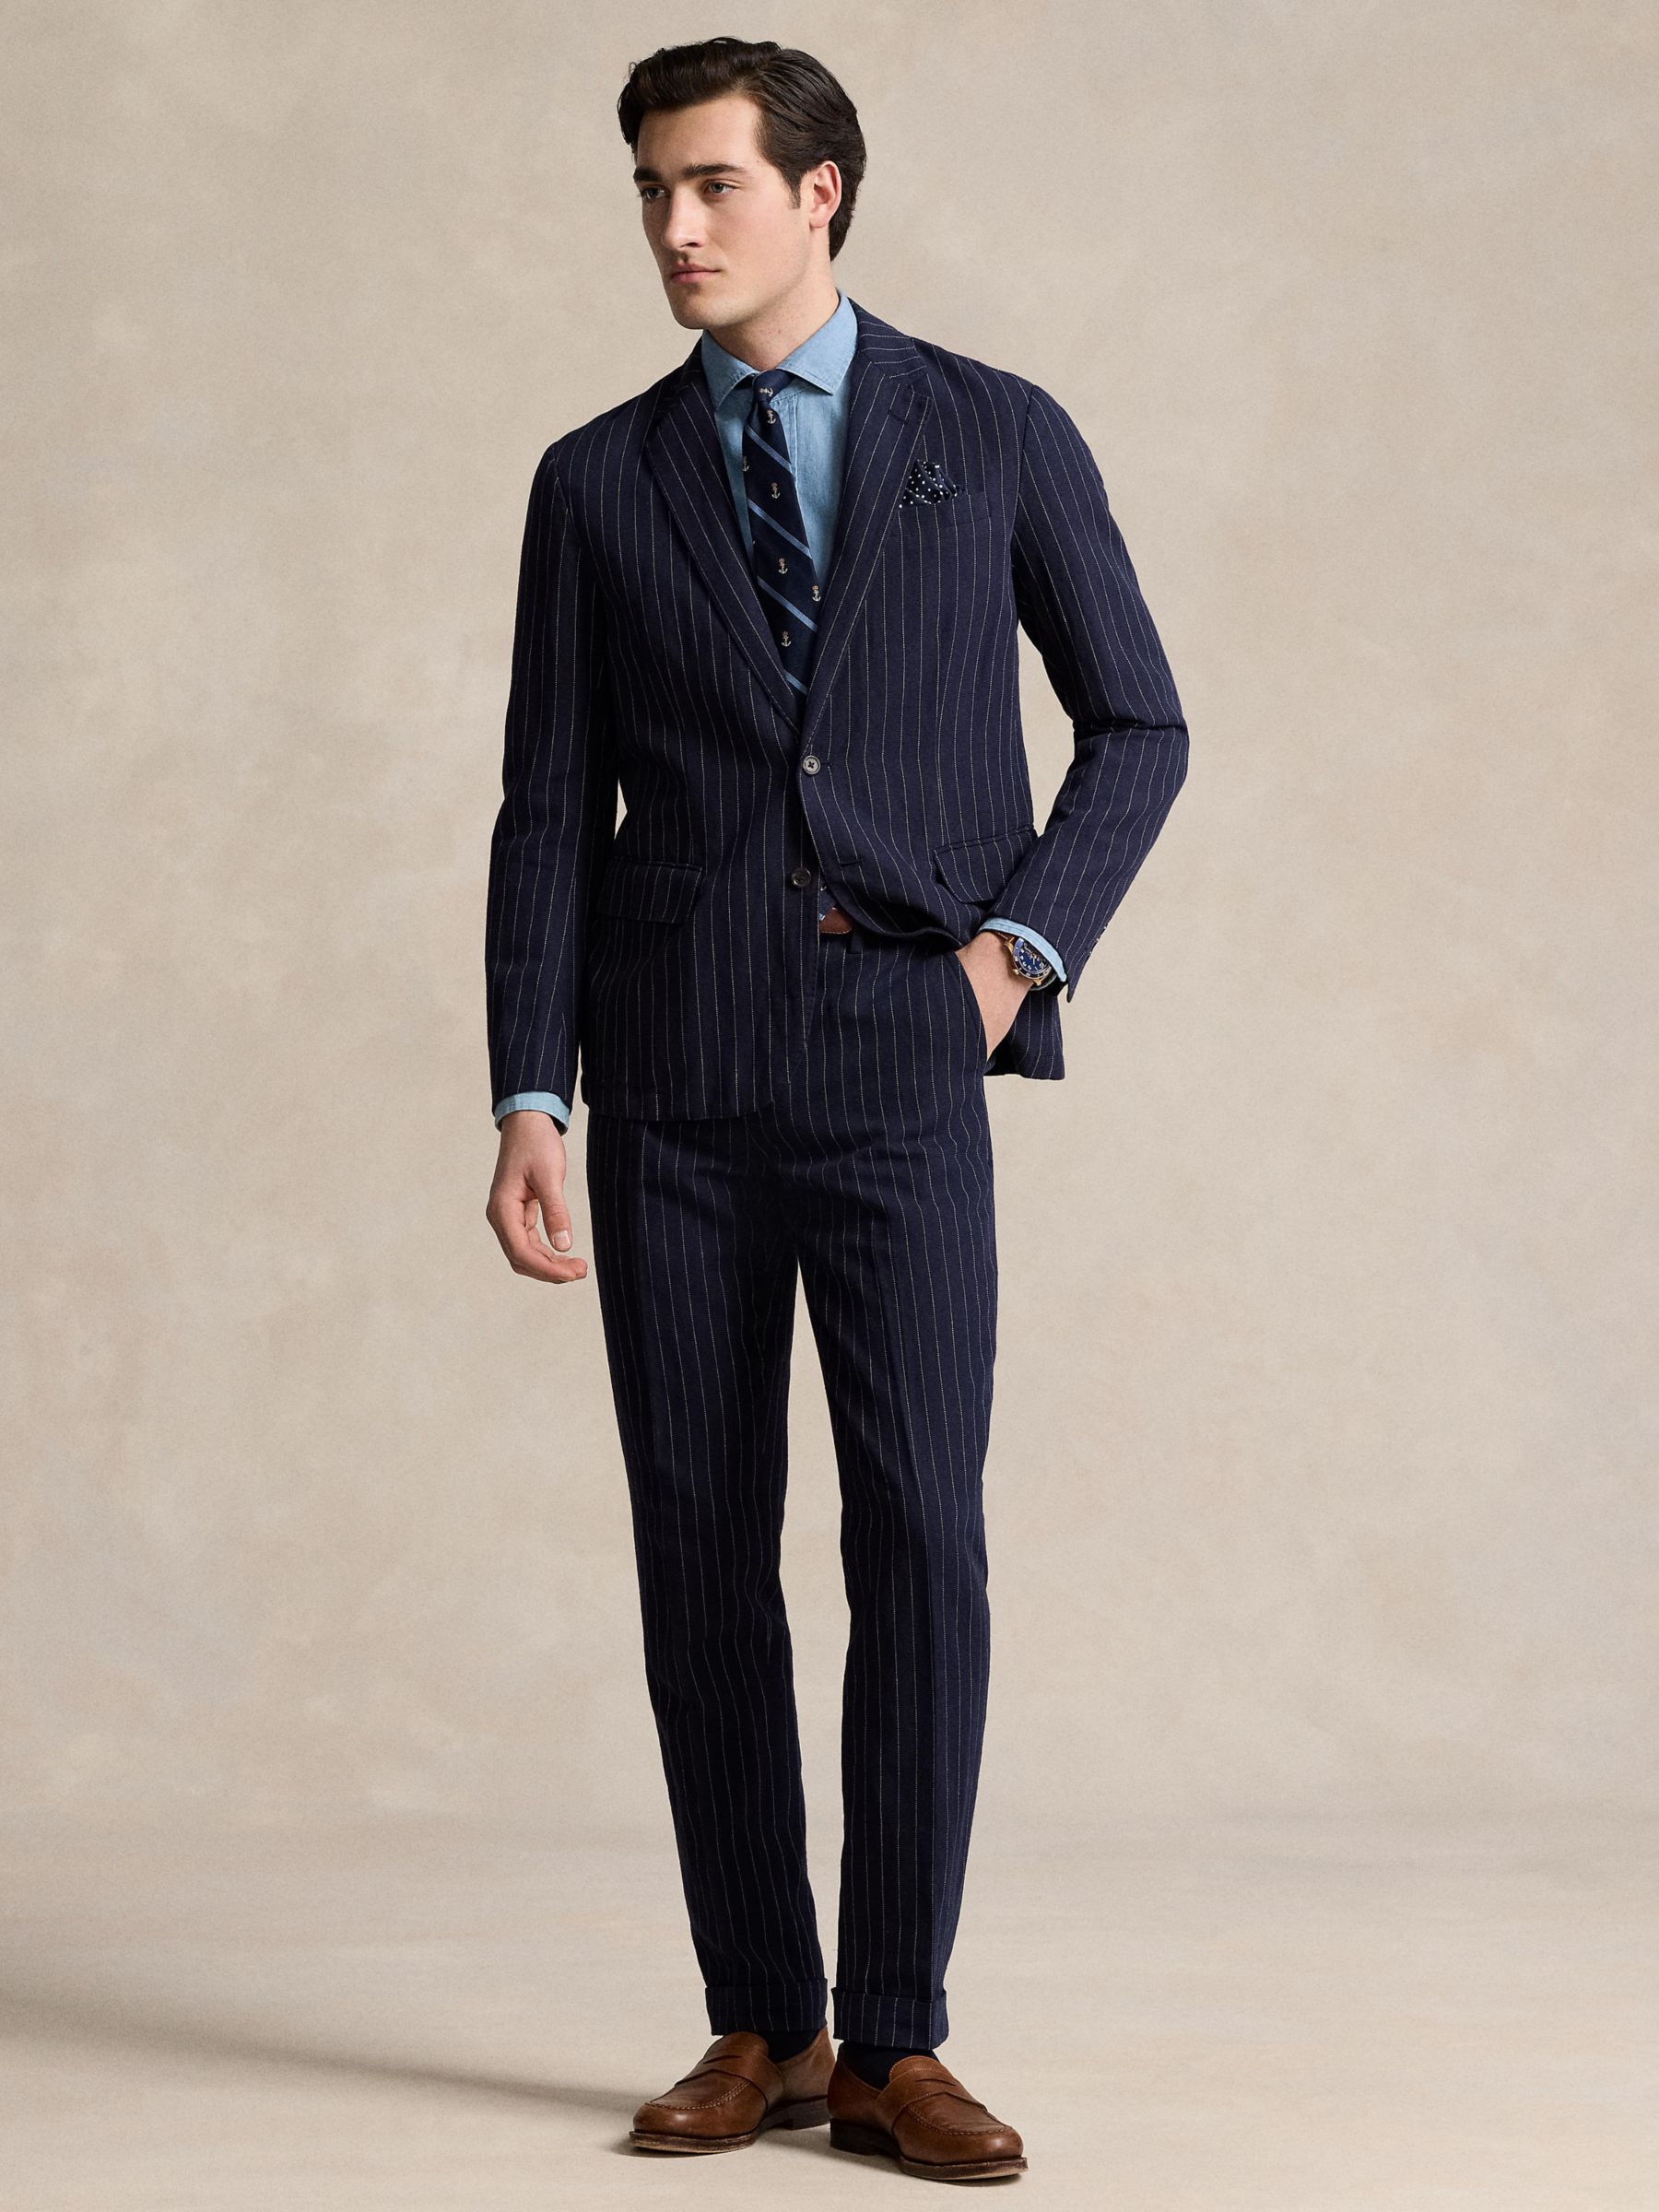 Ralph Lauren Pinstripe Twill Suit Trousers, Navy/Cream, 38R